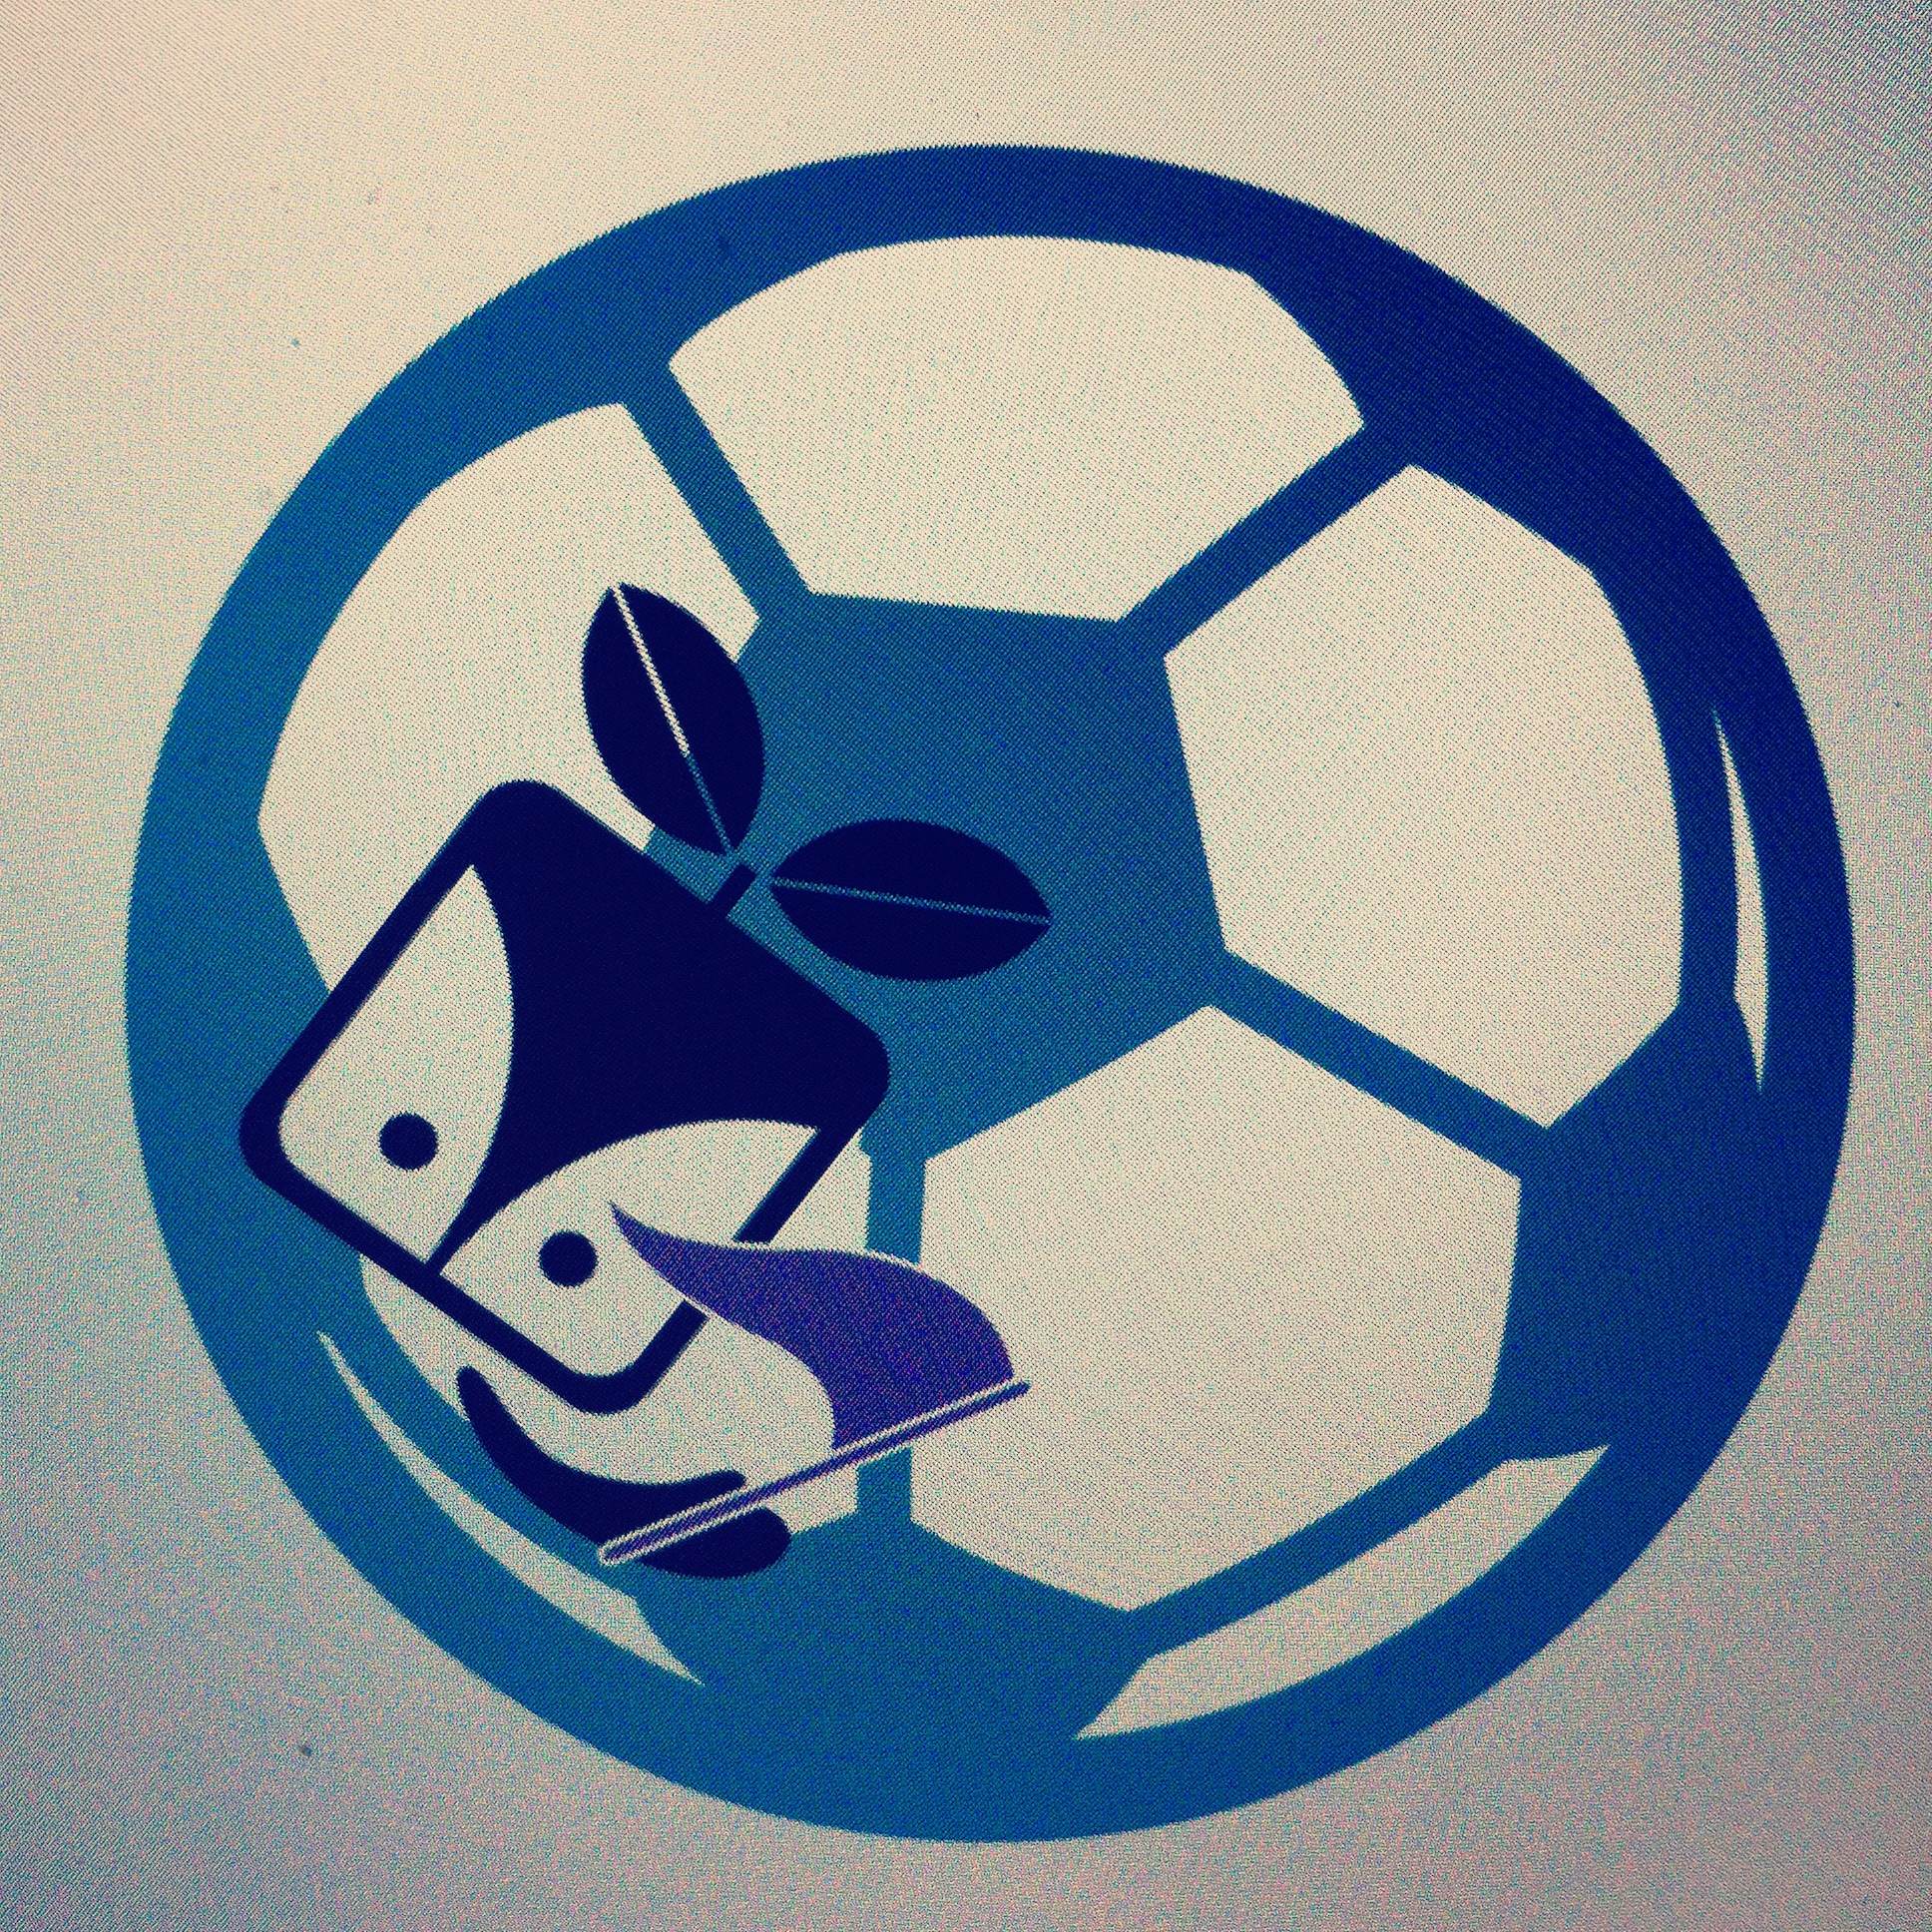 EURO 2012 badge